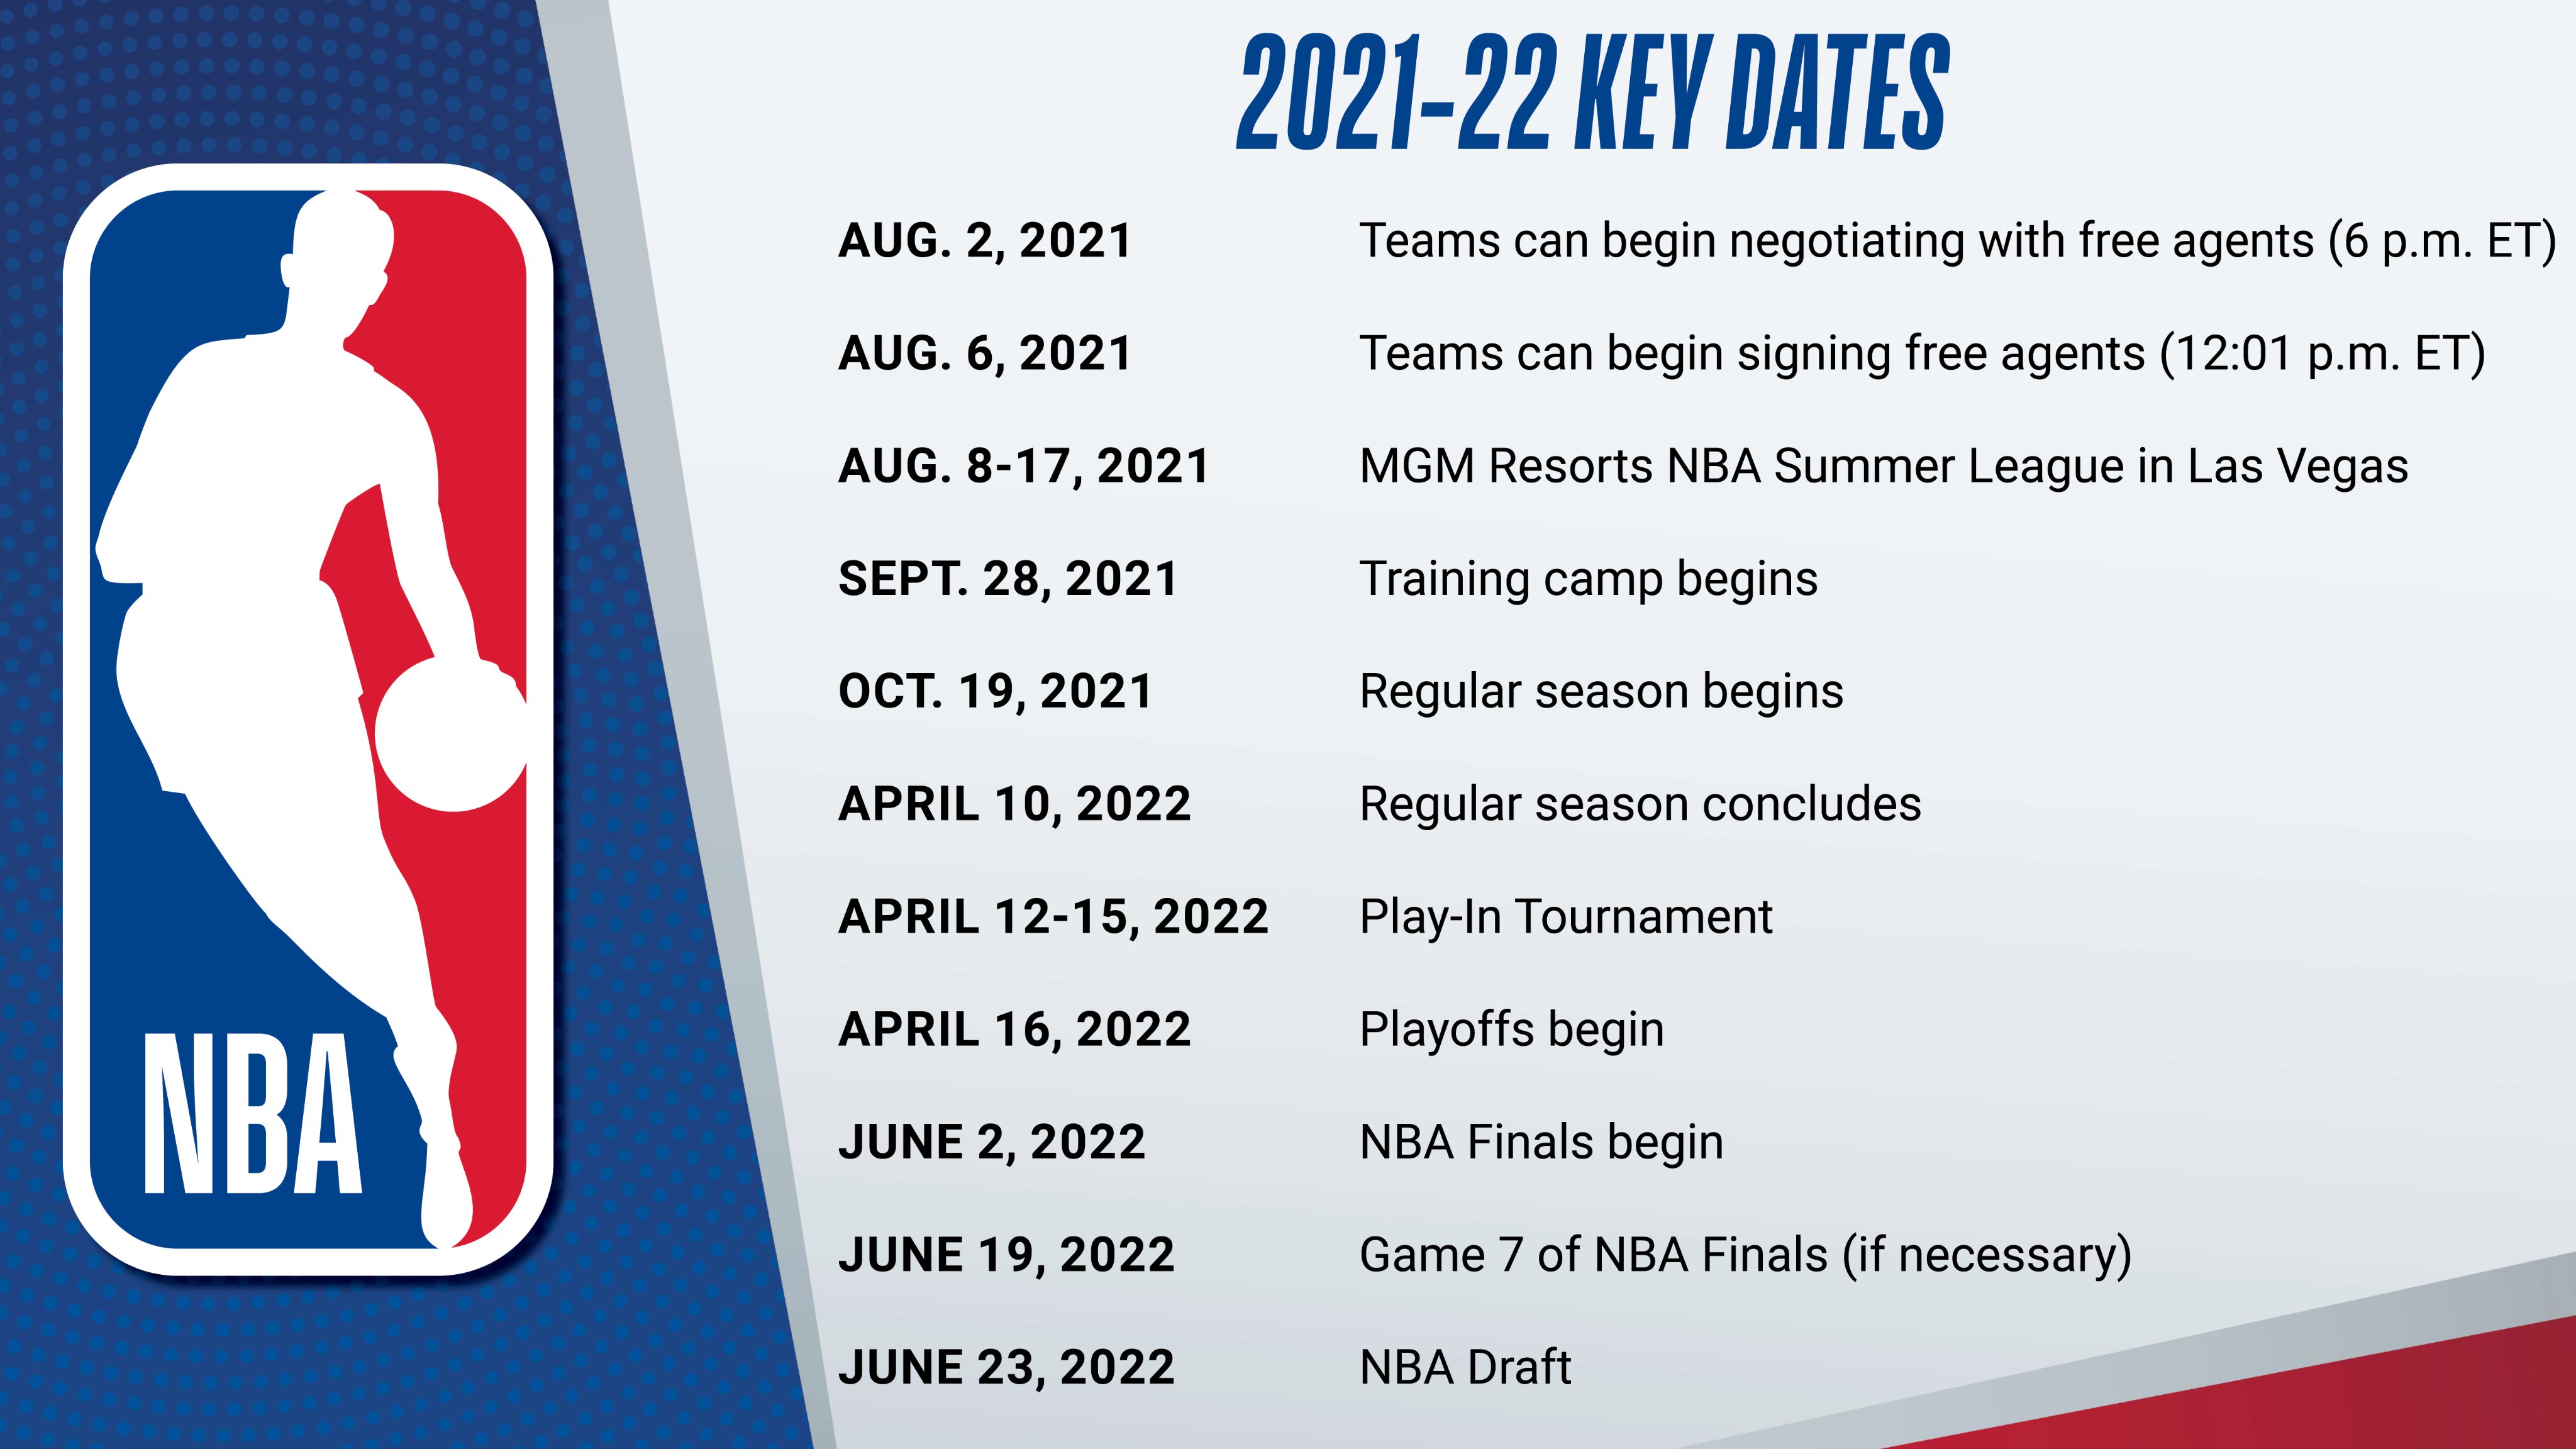 Nba Championship 2022 Schedule Nba Communications On Twitter: "Key Dates For The 2021-22 Nba Season ⬇️  Https://T.co/Nbwcivrhzh" / Twitter